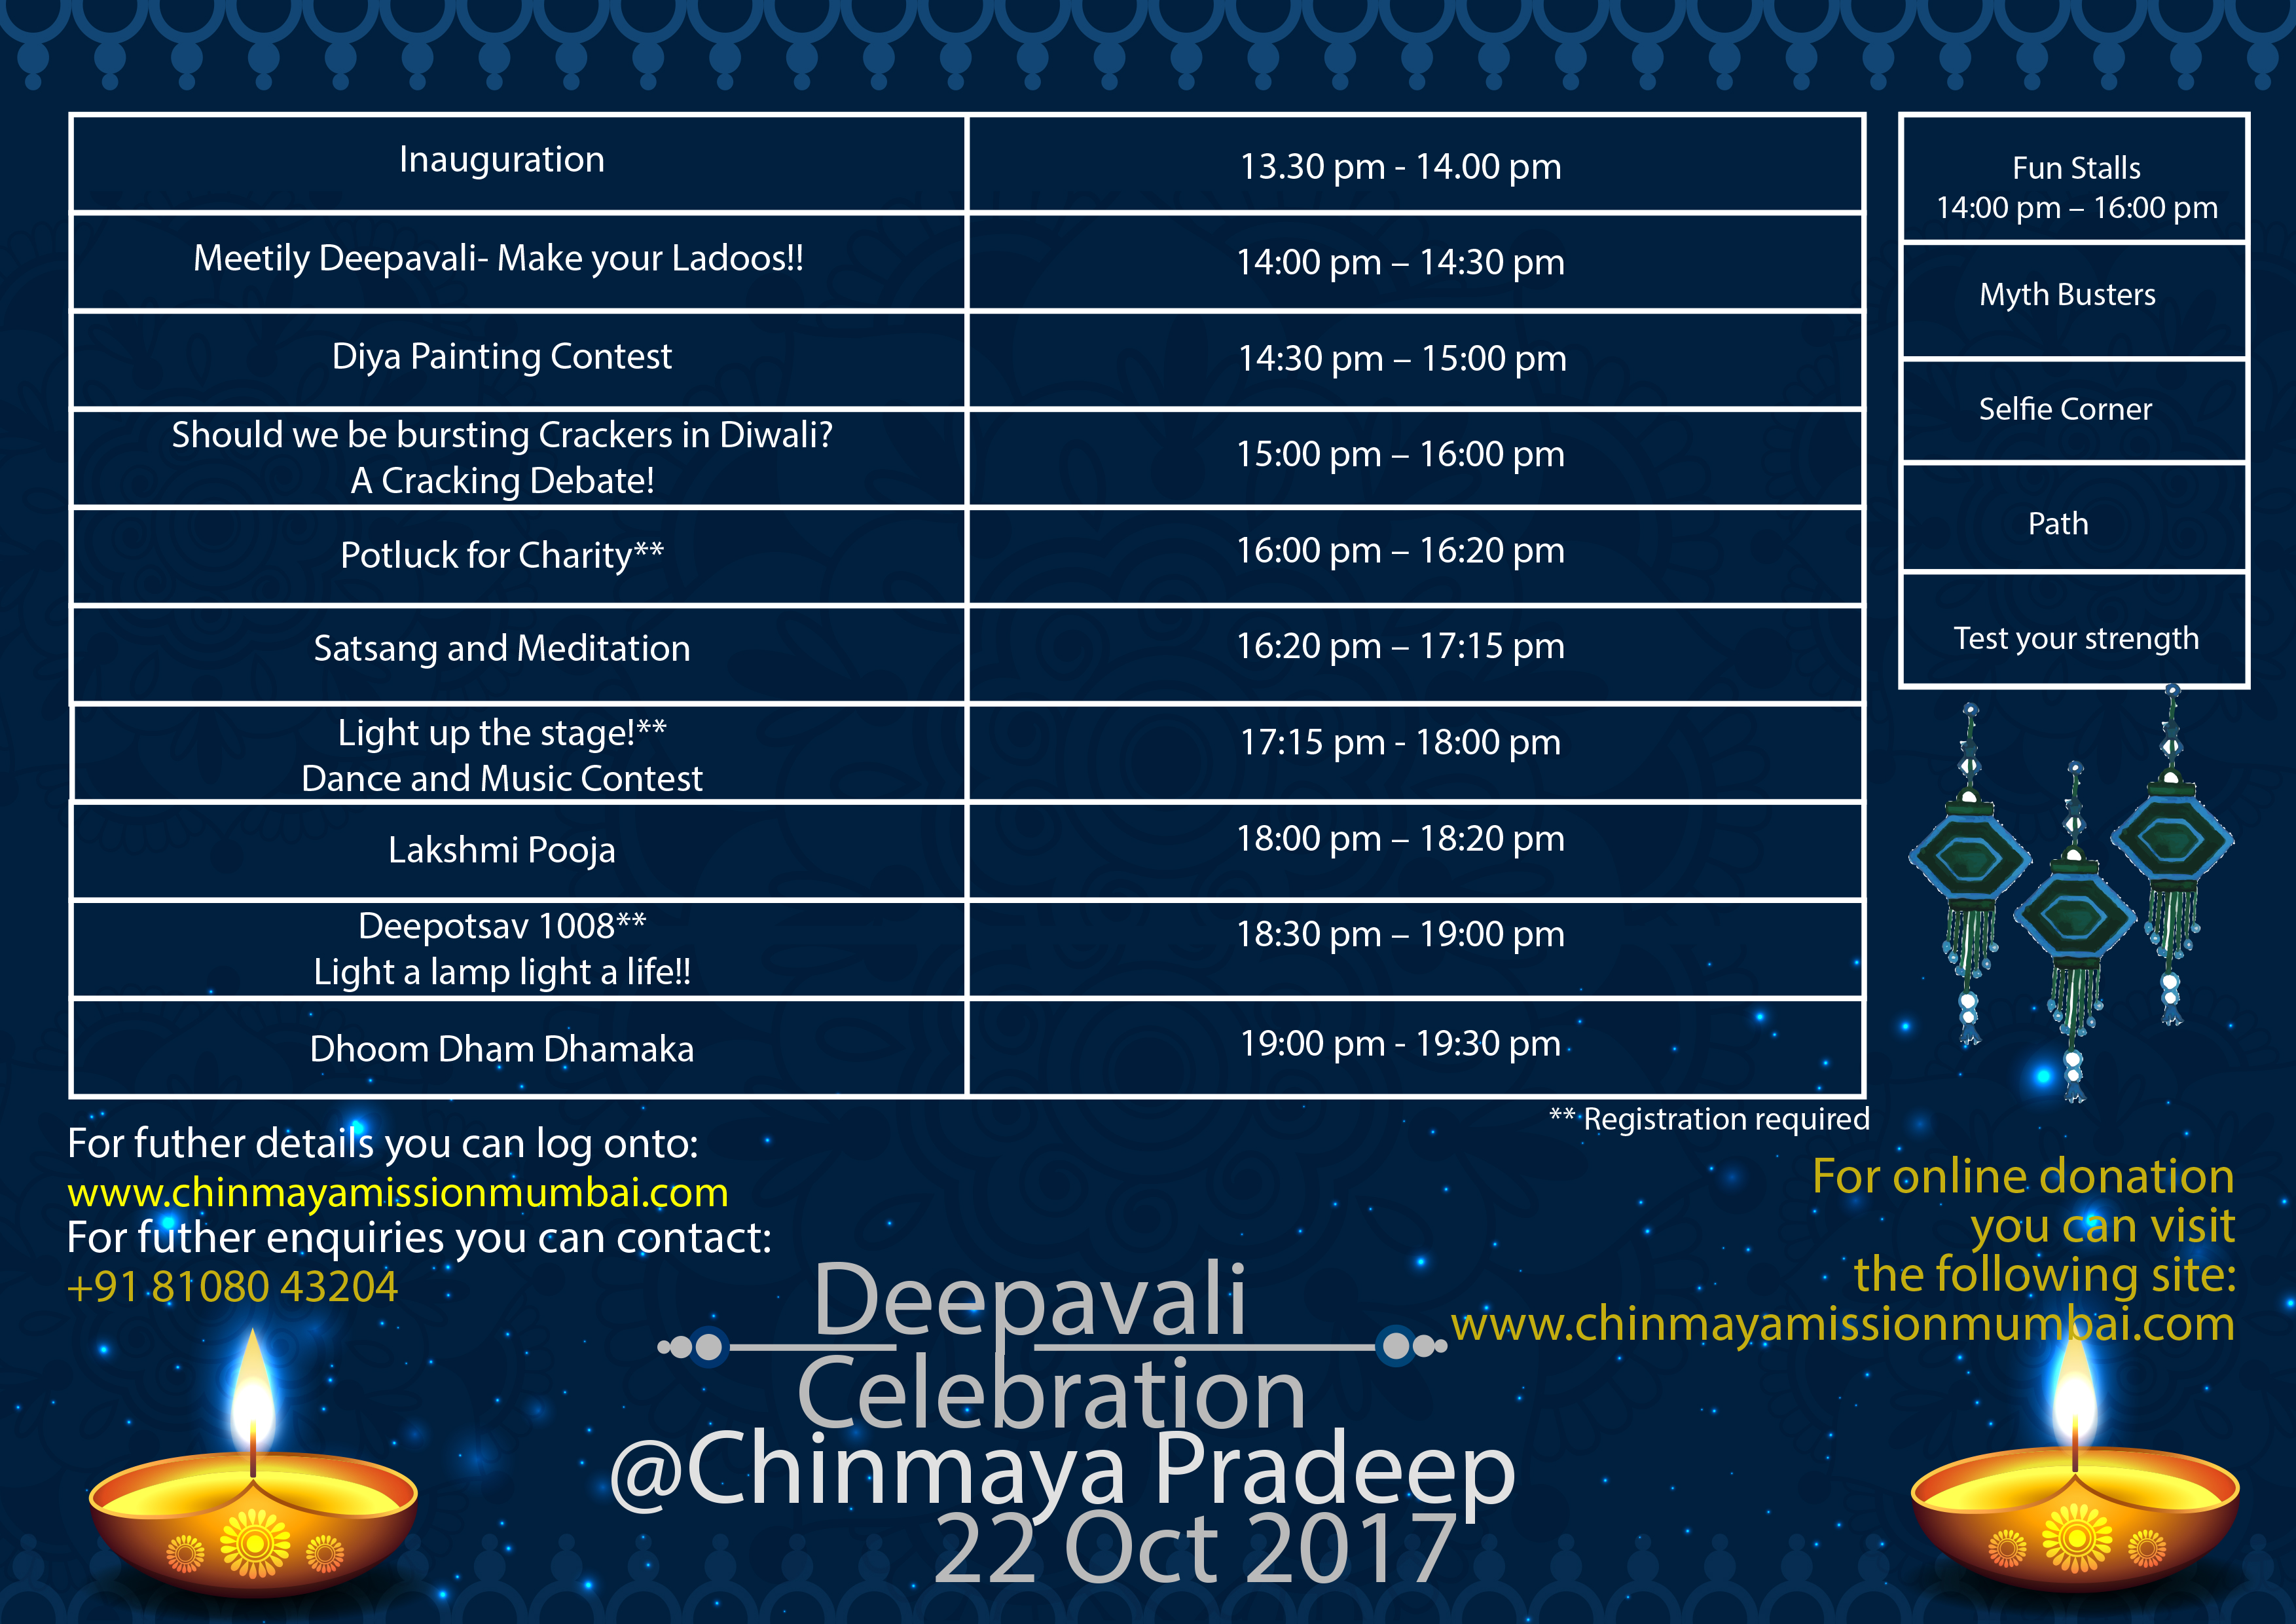 Deepavali Celebration @Chinmaya Pradeep 22 Oct. 20017